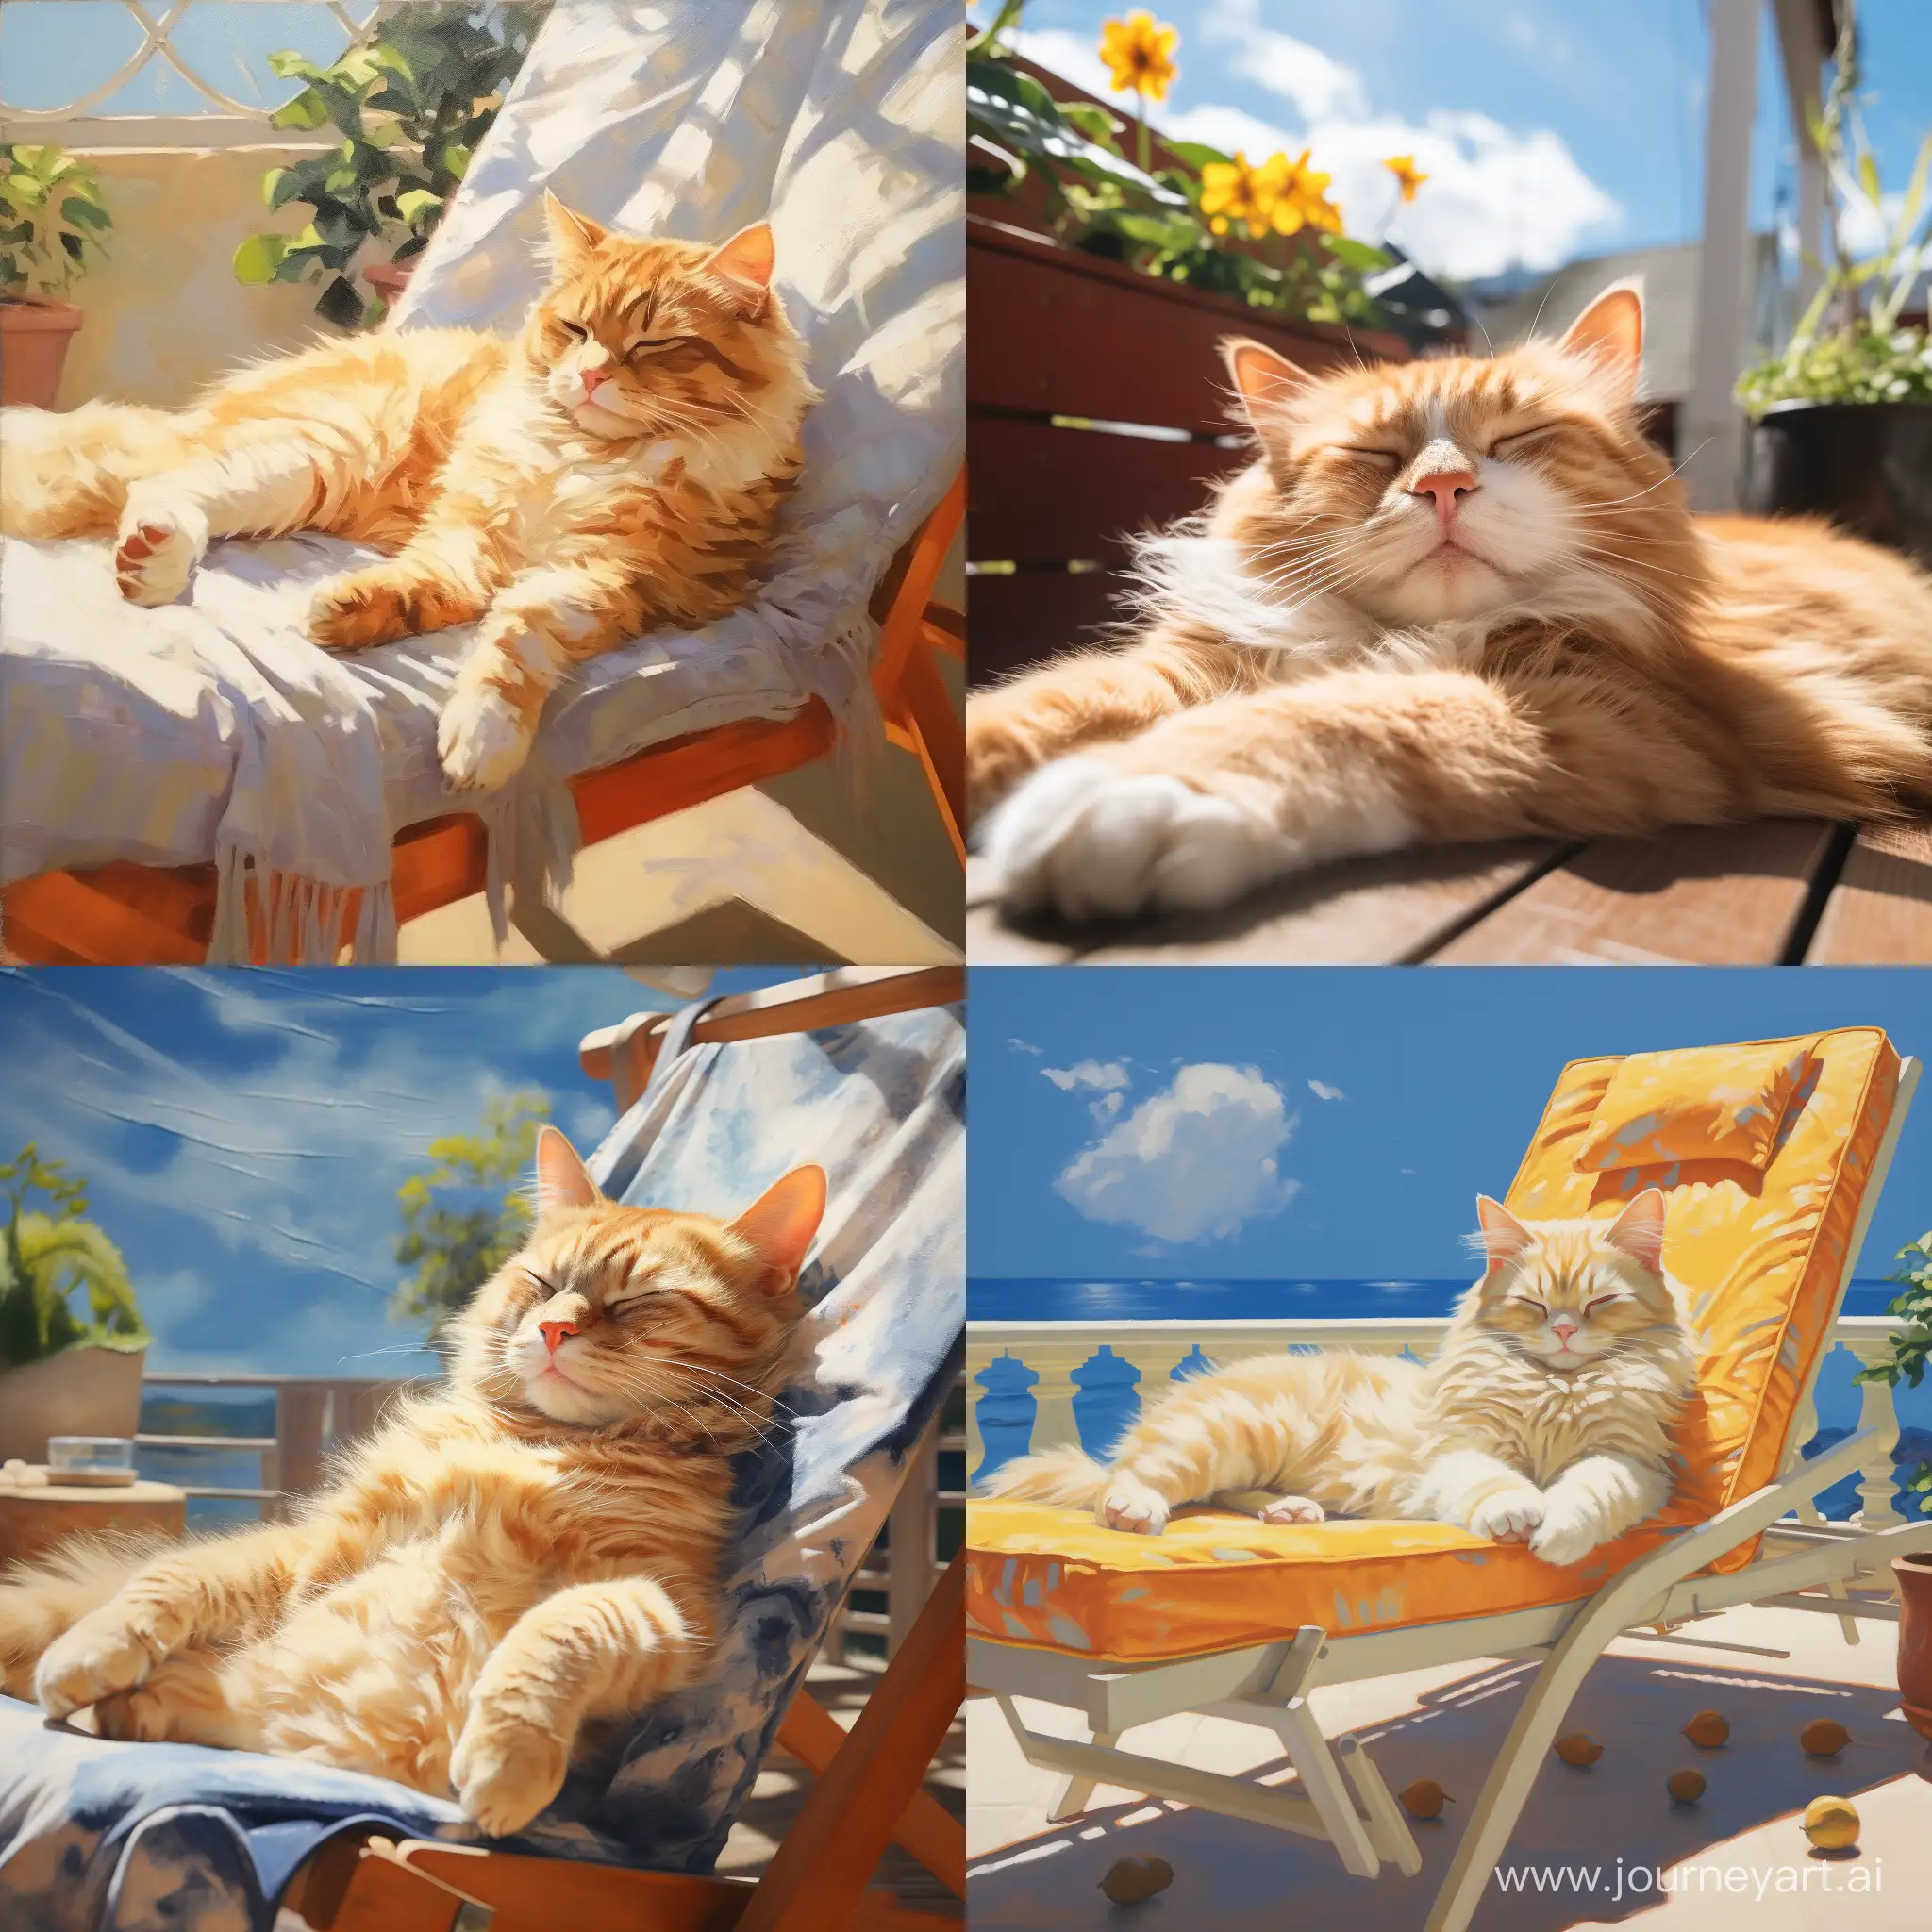 Adorable-Cat-Enjoying-Sunbath-in-Perfect-11-Aspect-Ratio-Serene-Pet-Relaxation